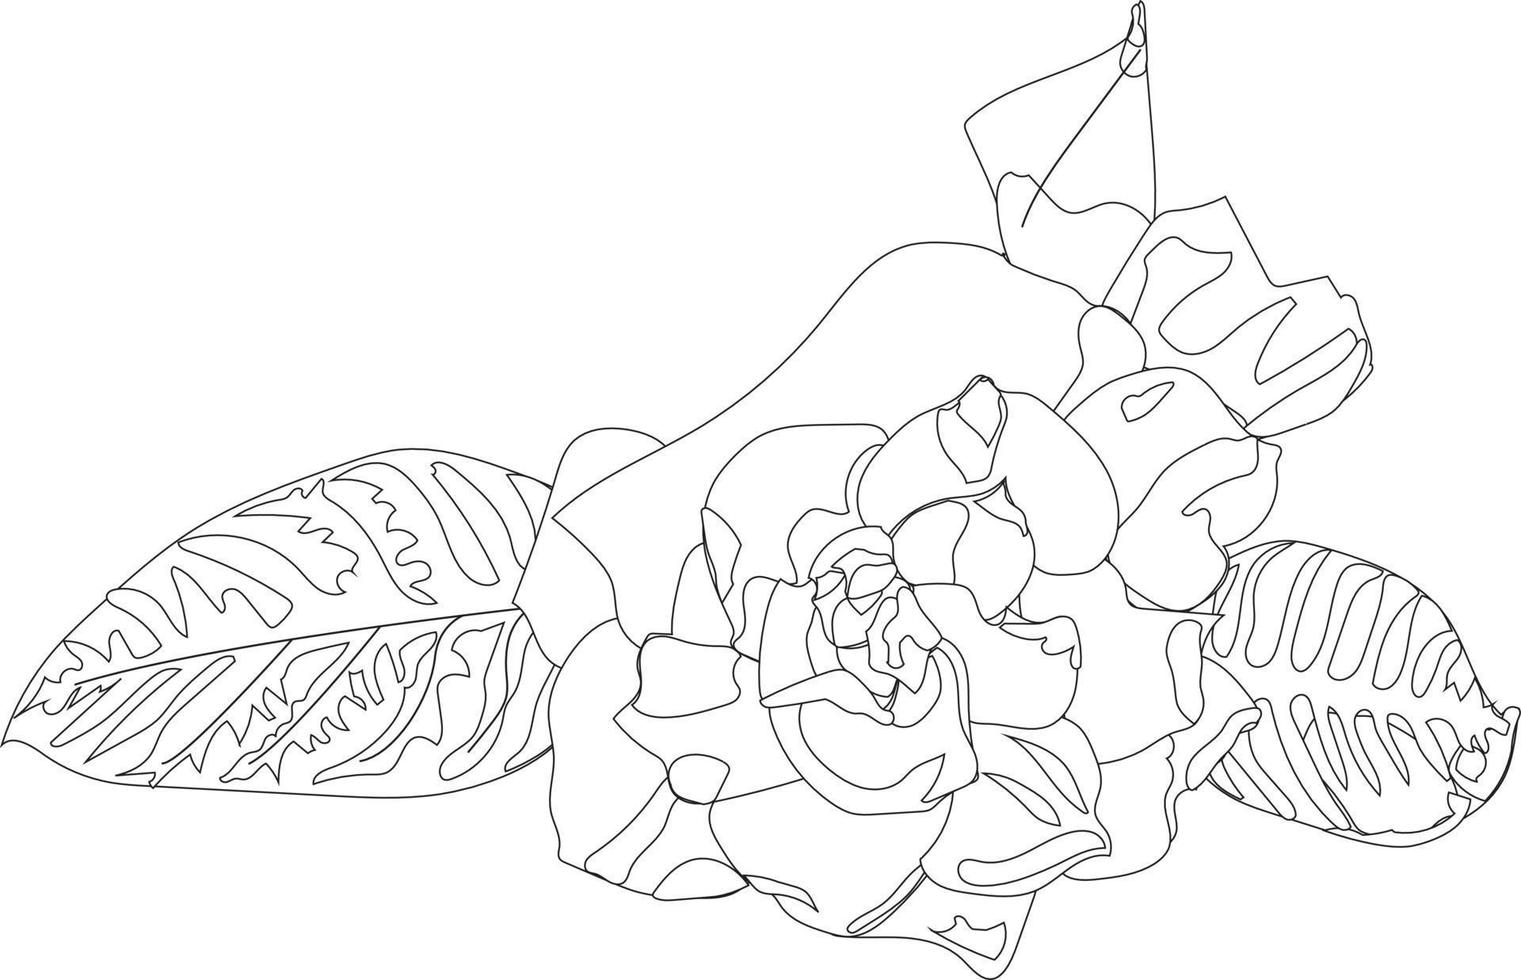 Gardenia in doodle style. Vector illustration.